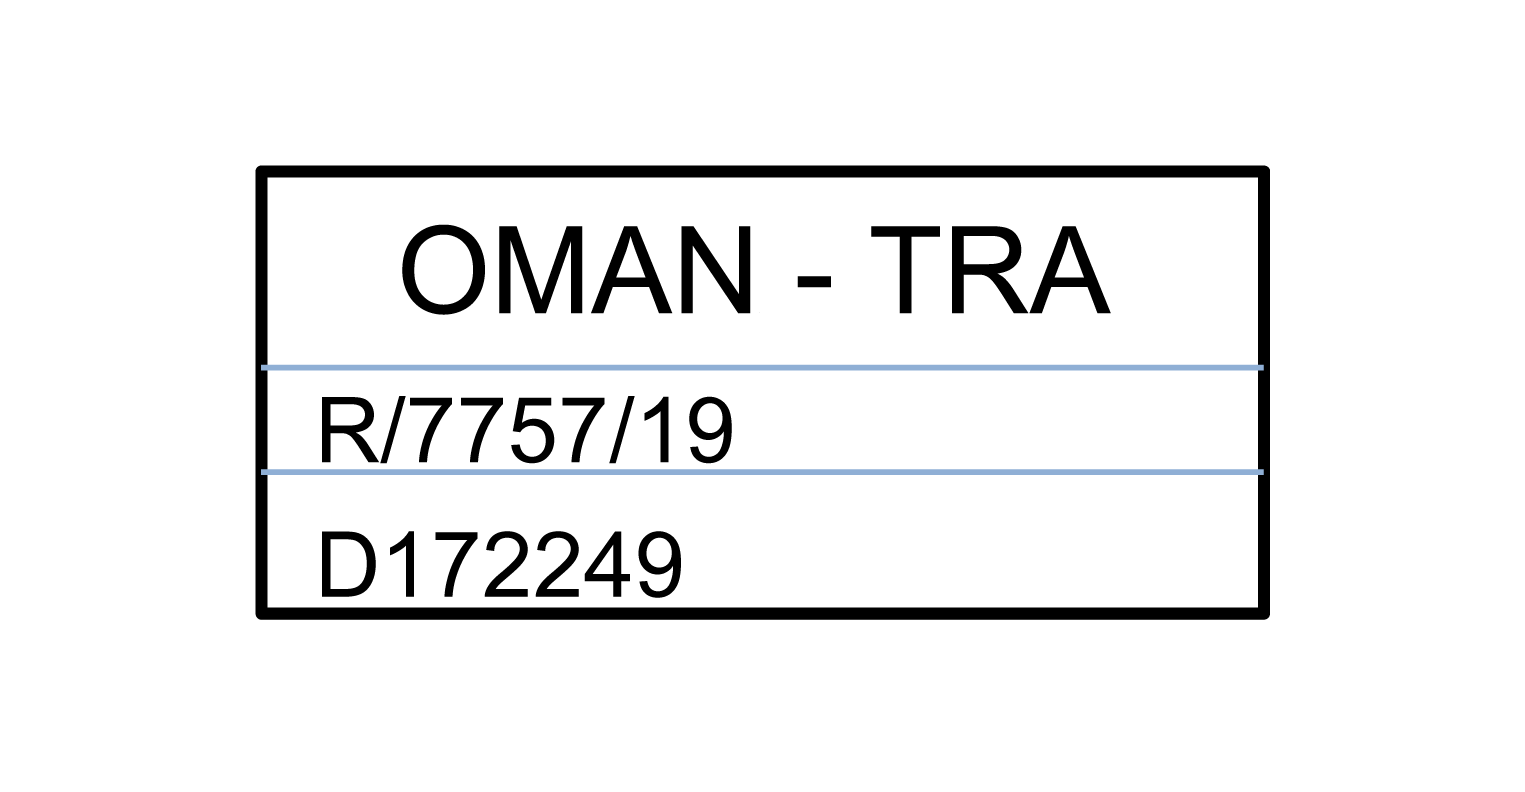 PS2-2146-Oman remote key approval